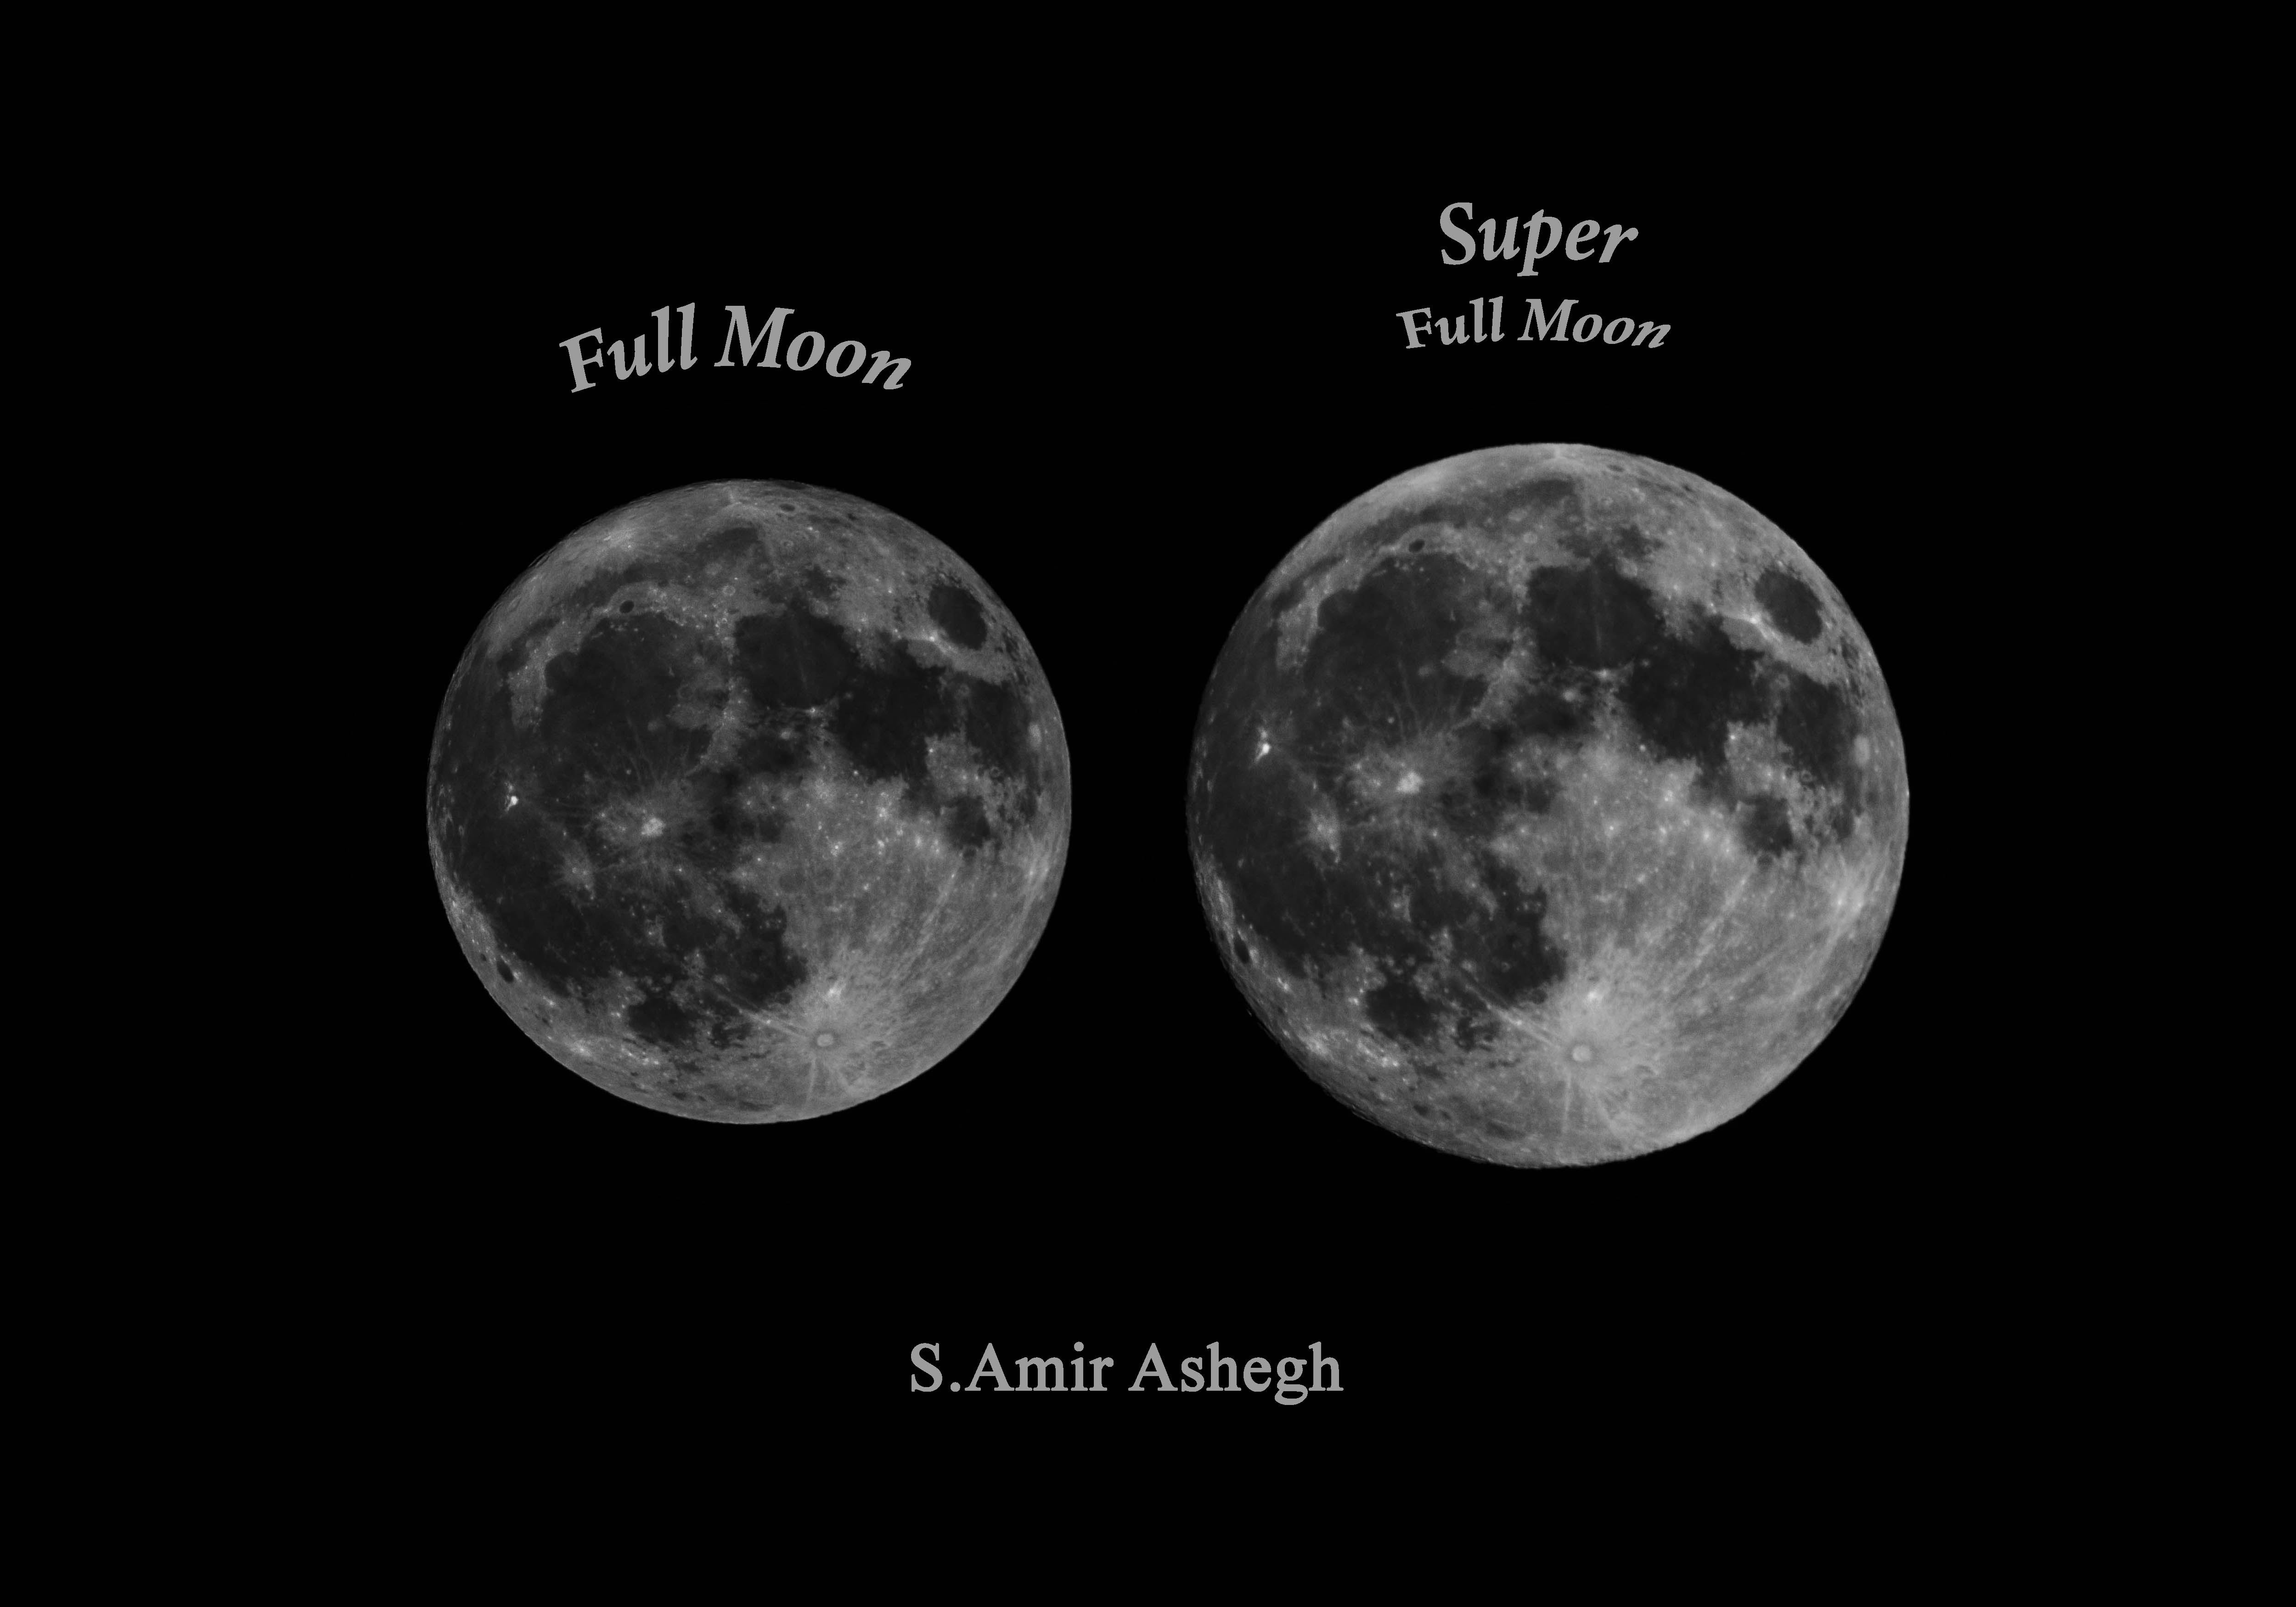 Super Full Moon & Full Moon